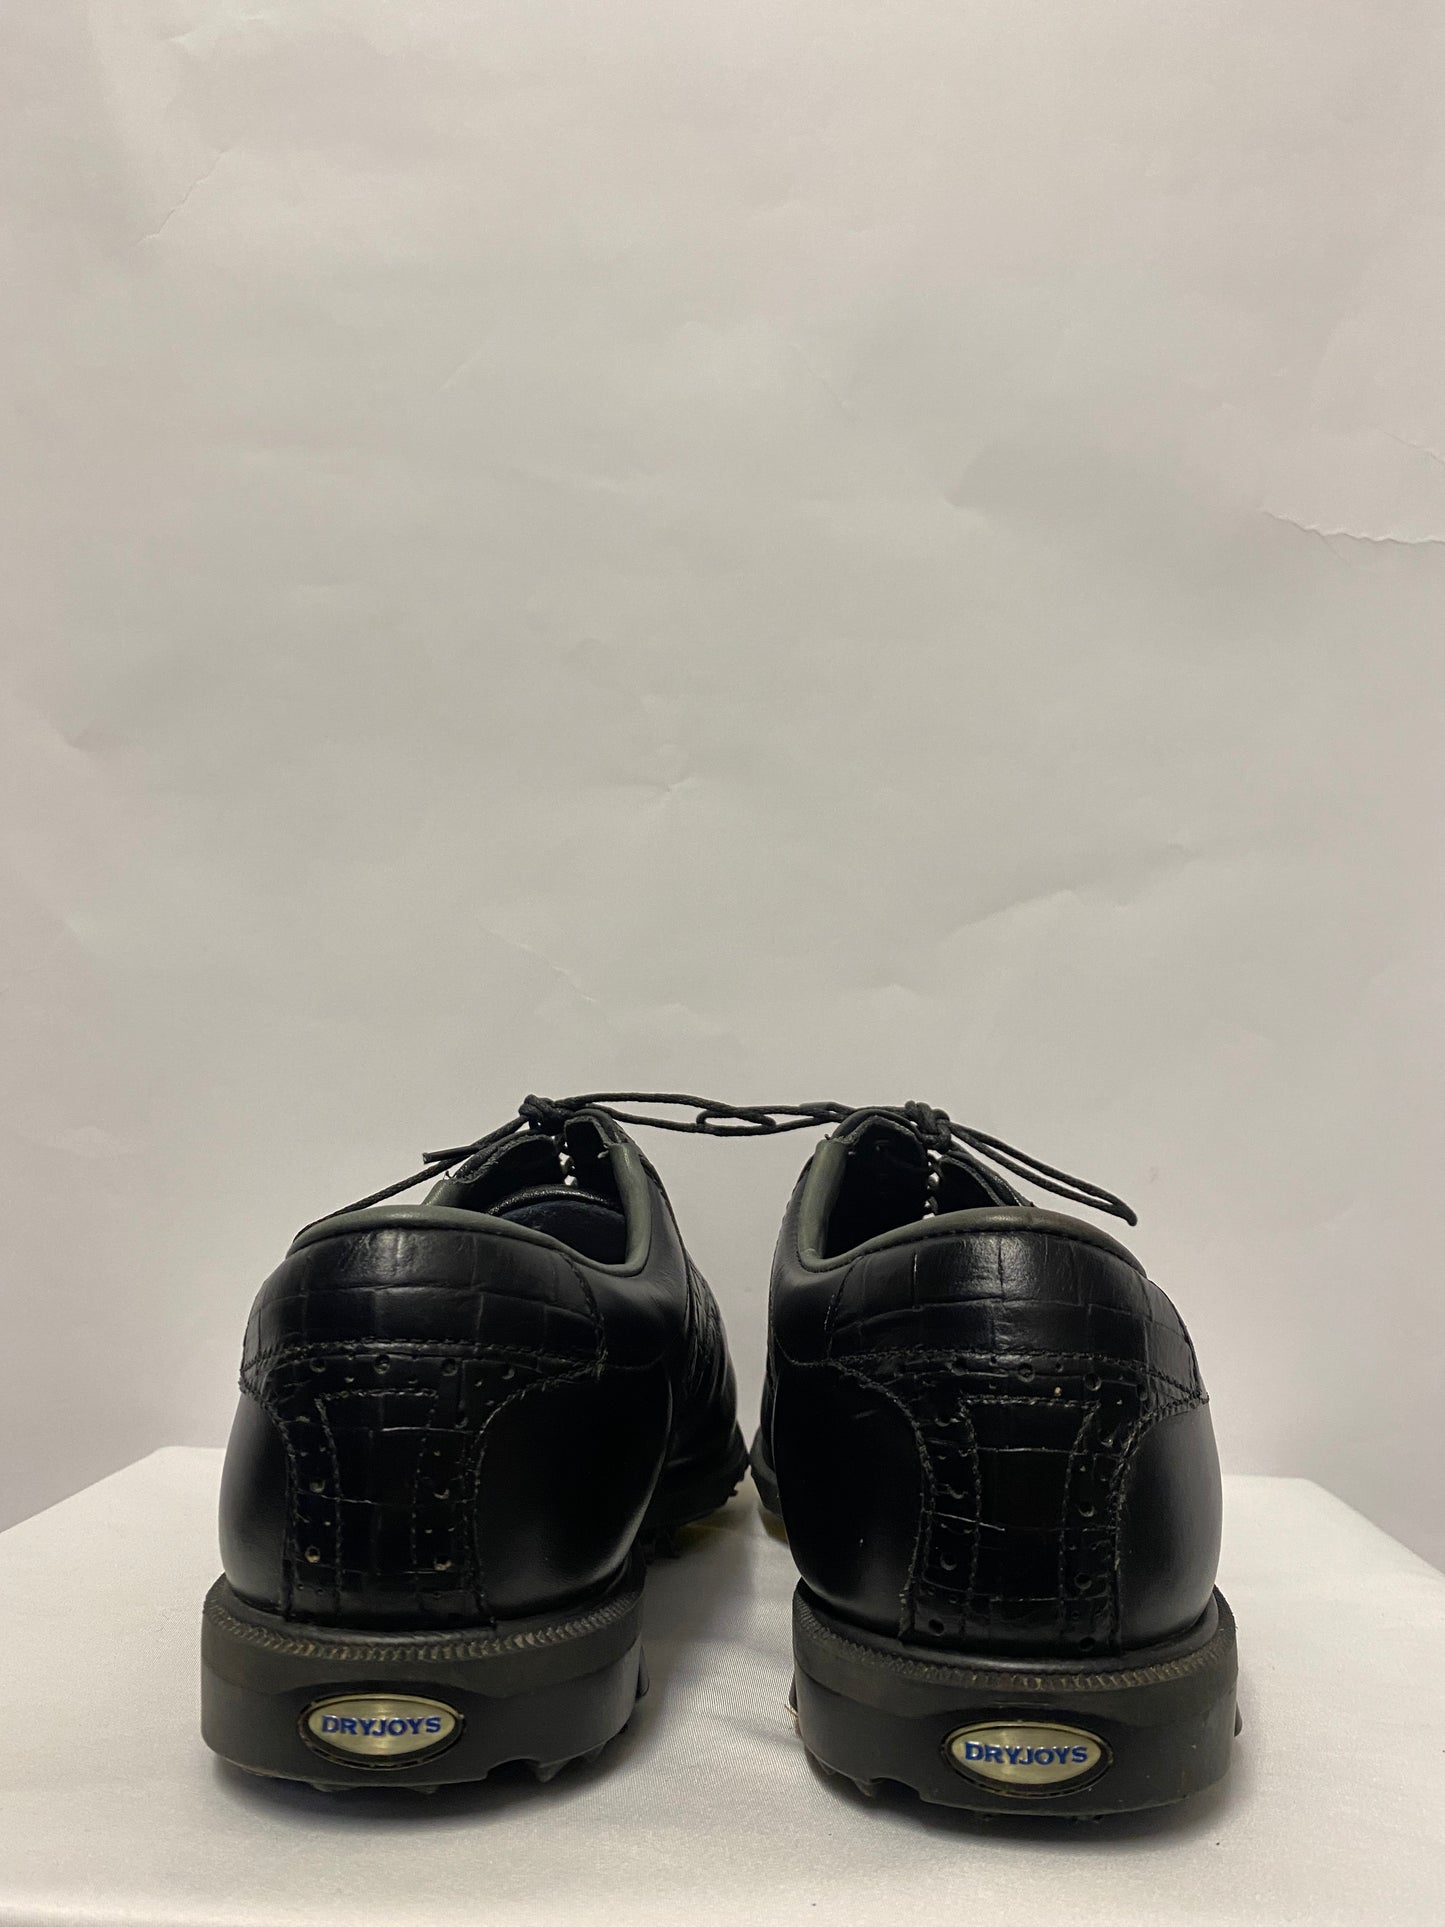 Dry Jons Black Leahter Golf Shoes 8.5